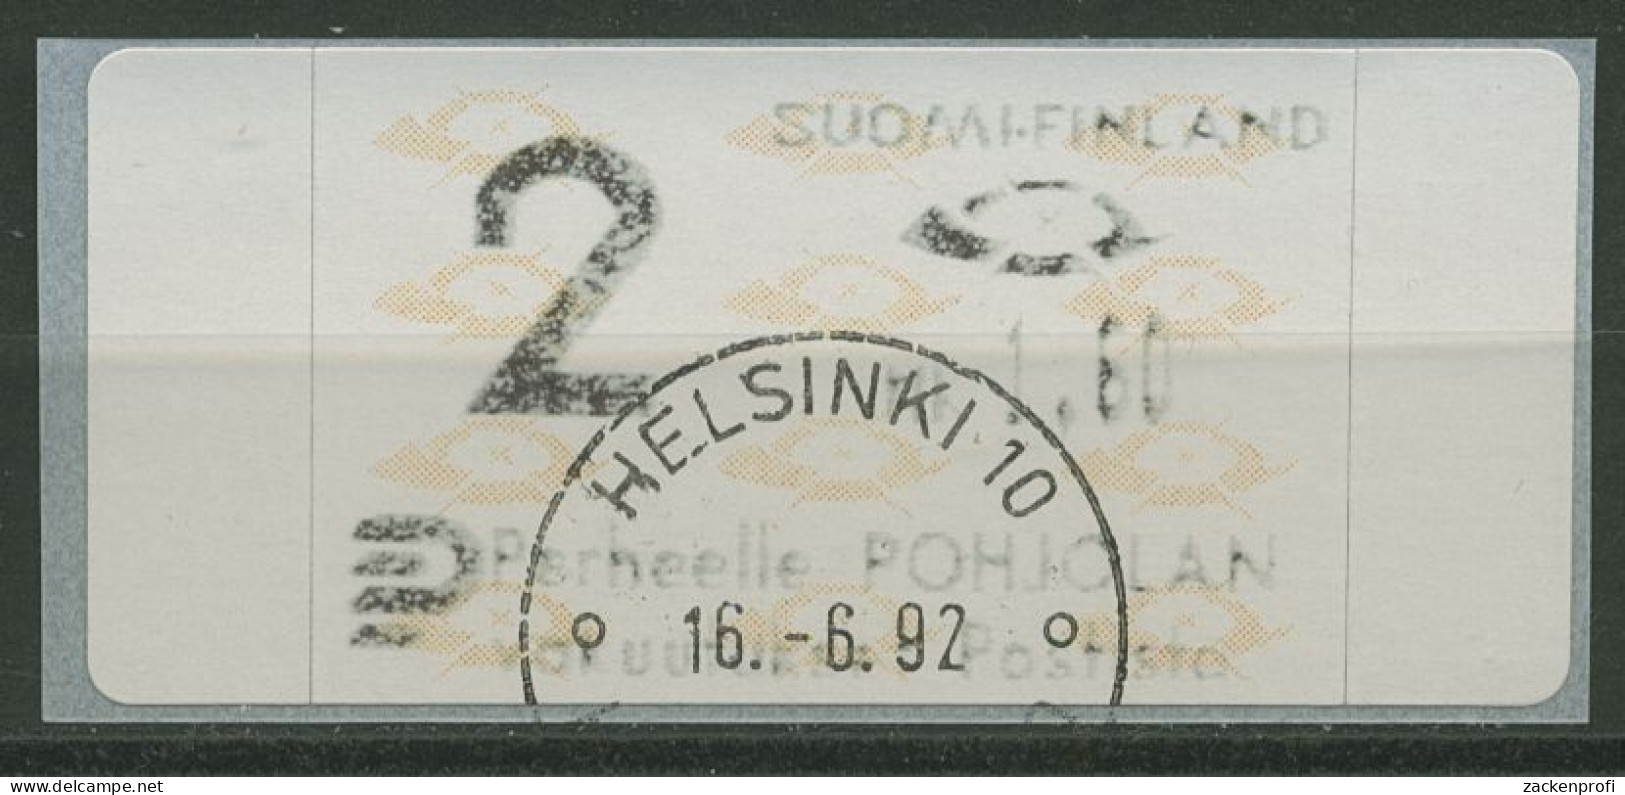 Finnland Automatenmarken 1992 Posthörner Einzelwert ATM 12.3 Z2 Gestempelt - Automaatzegels [ATM]